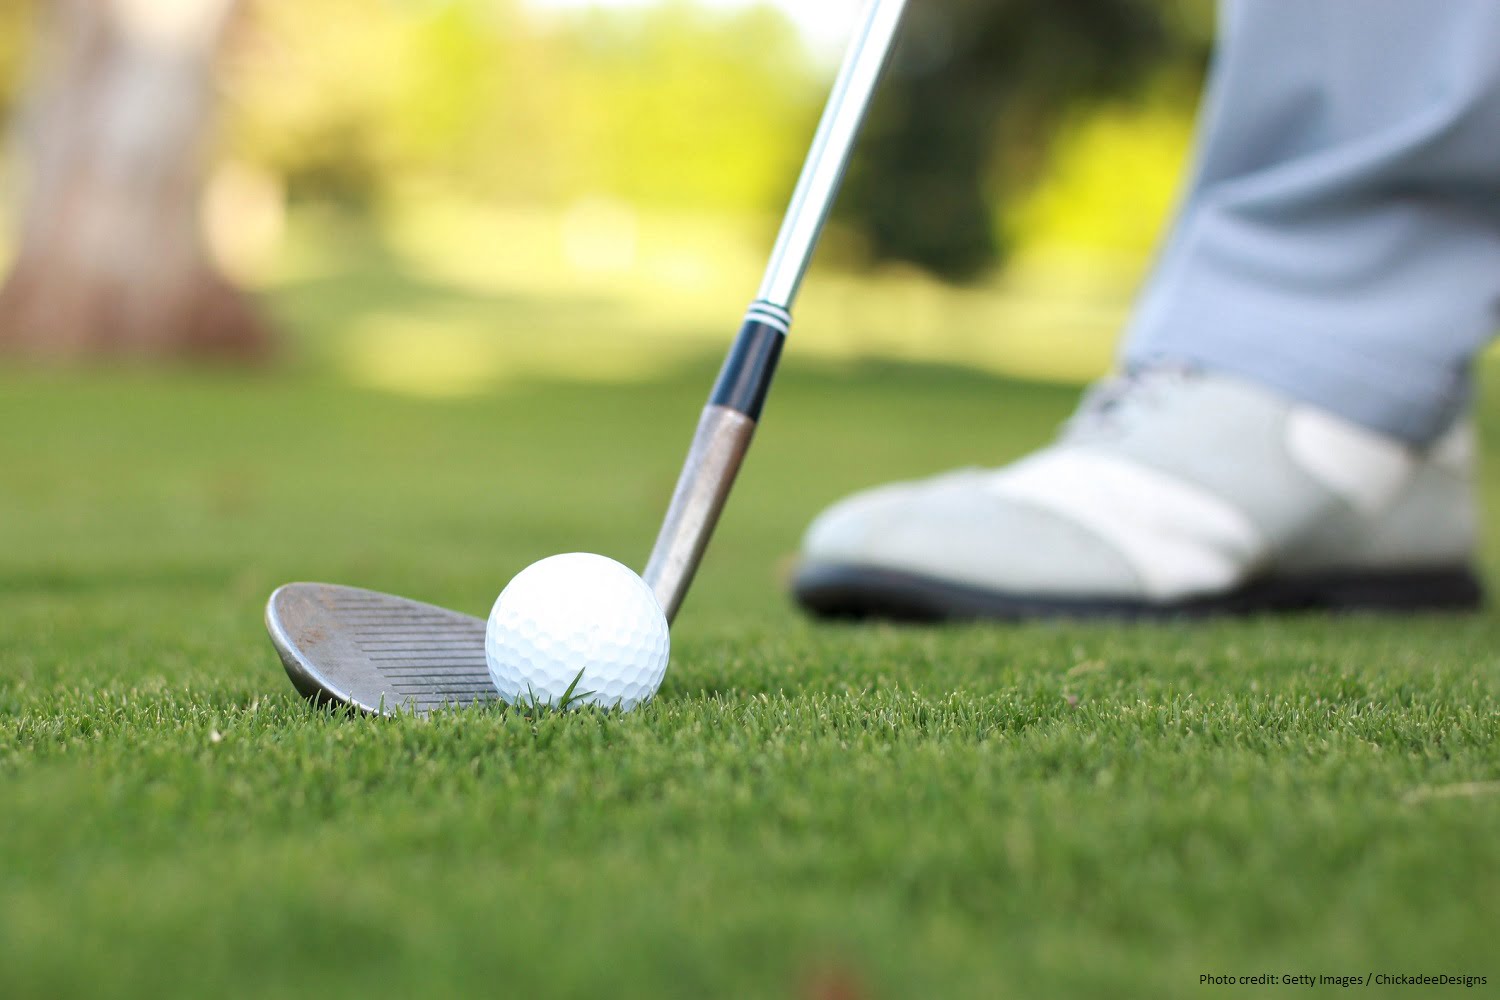 Play 3 of Our Favorite Poconos Golf Courses